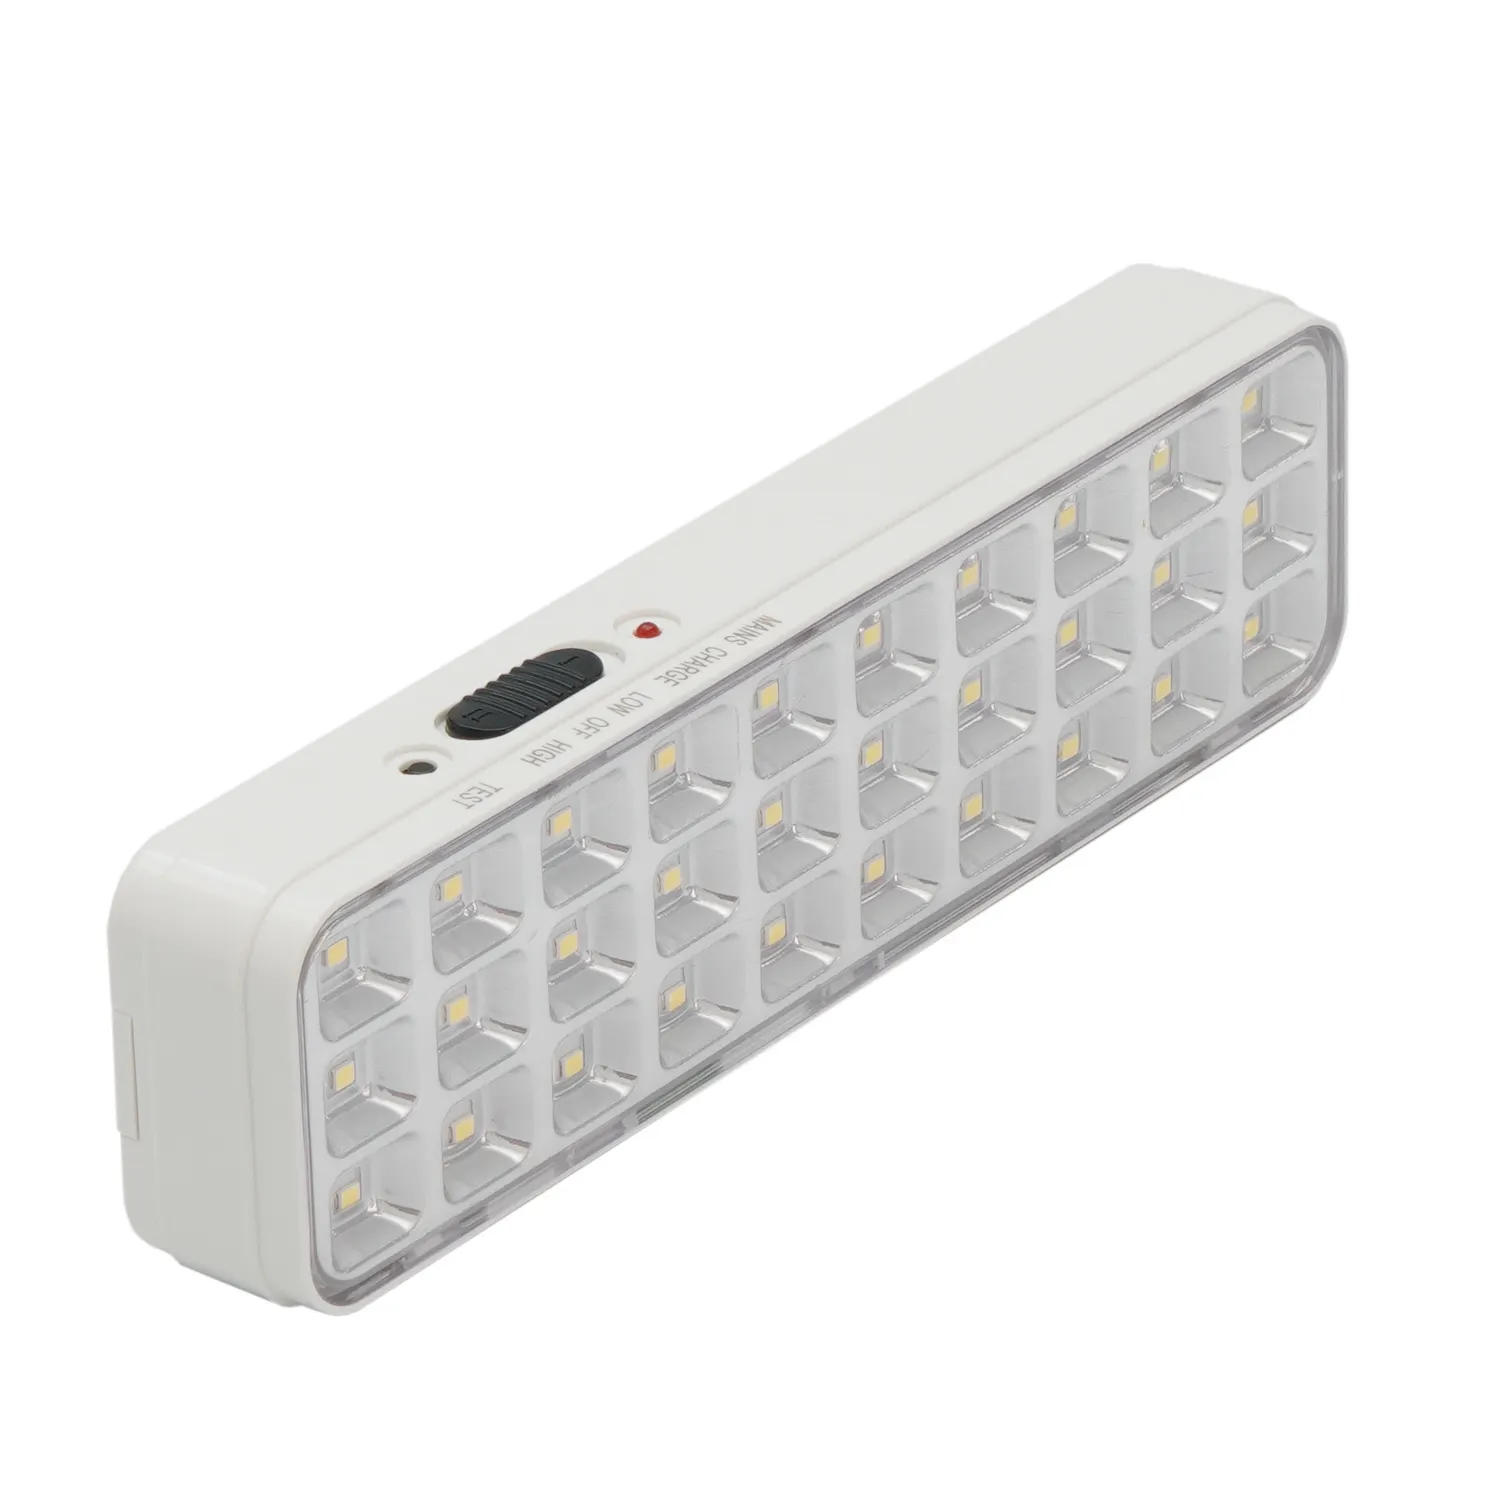 PVC 스티커가있는 비상 LED 조명 30 PCS LED, 맞춤형 픽토그램 사용 가능